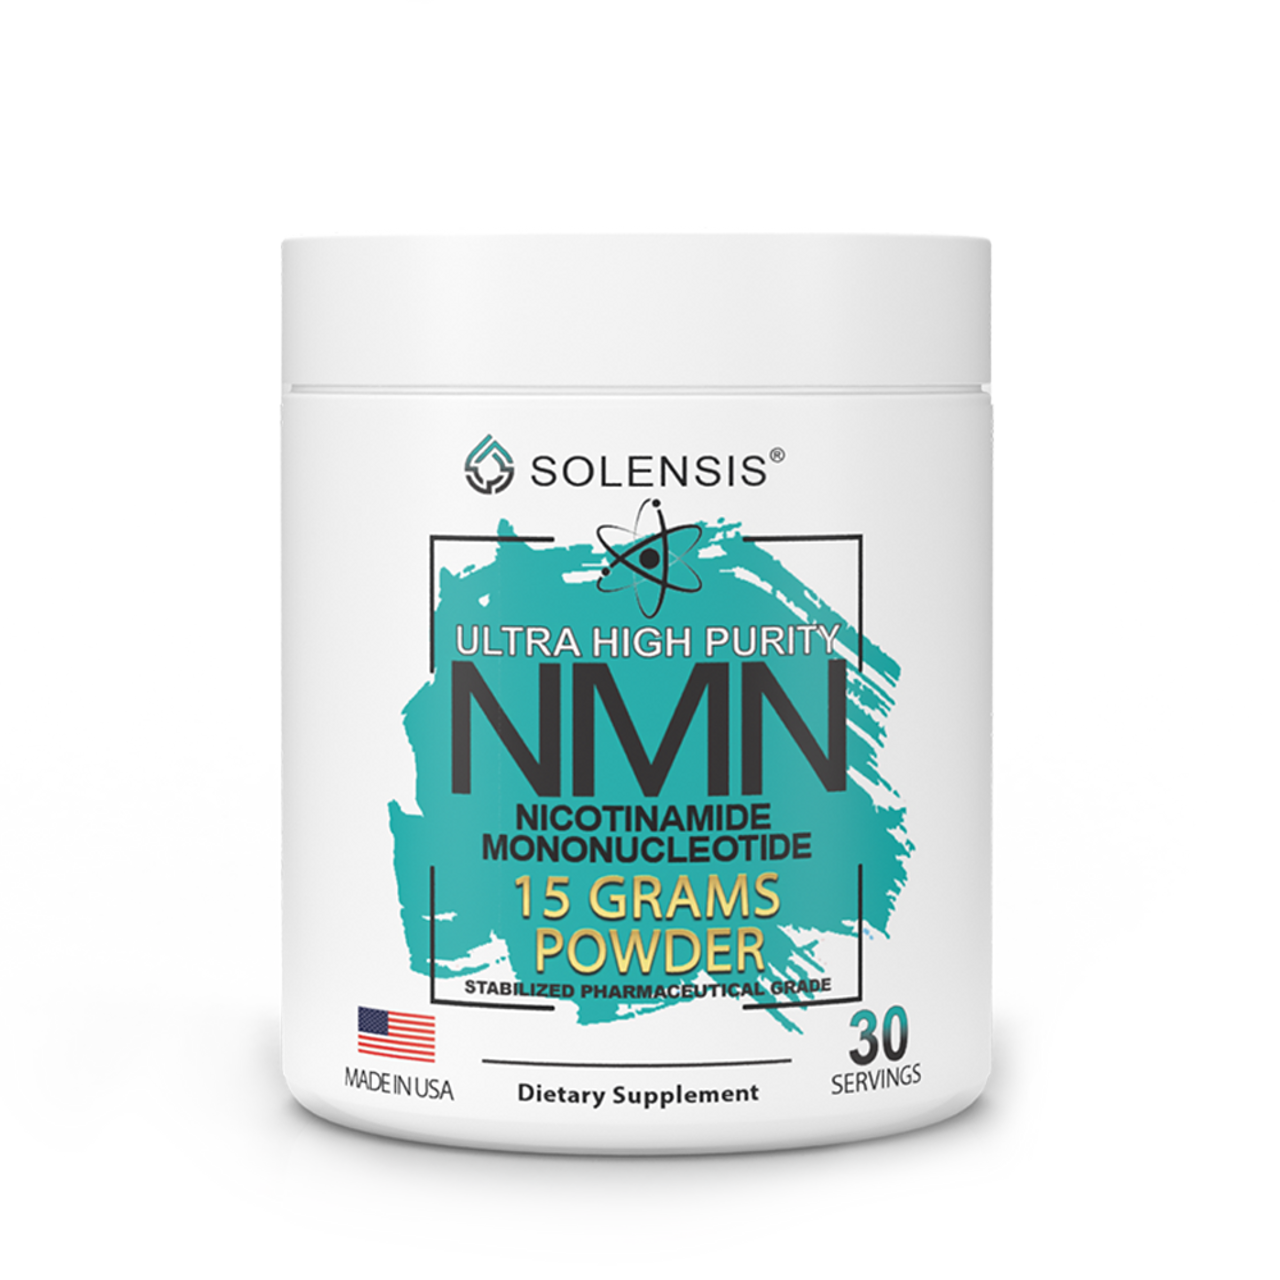 THE NMN POWDER - NICOTINAMIDE MONONUCLEOTIDE 15G